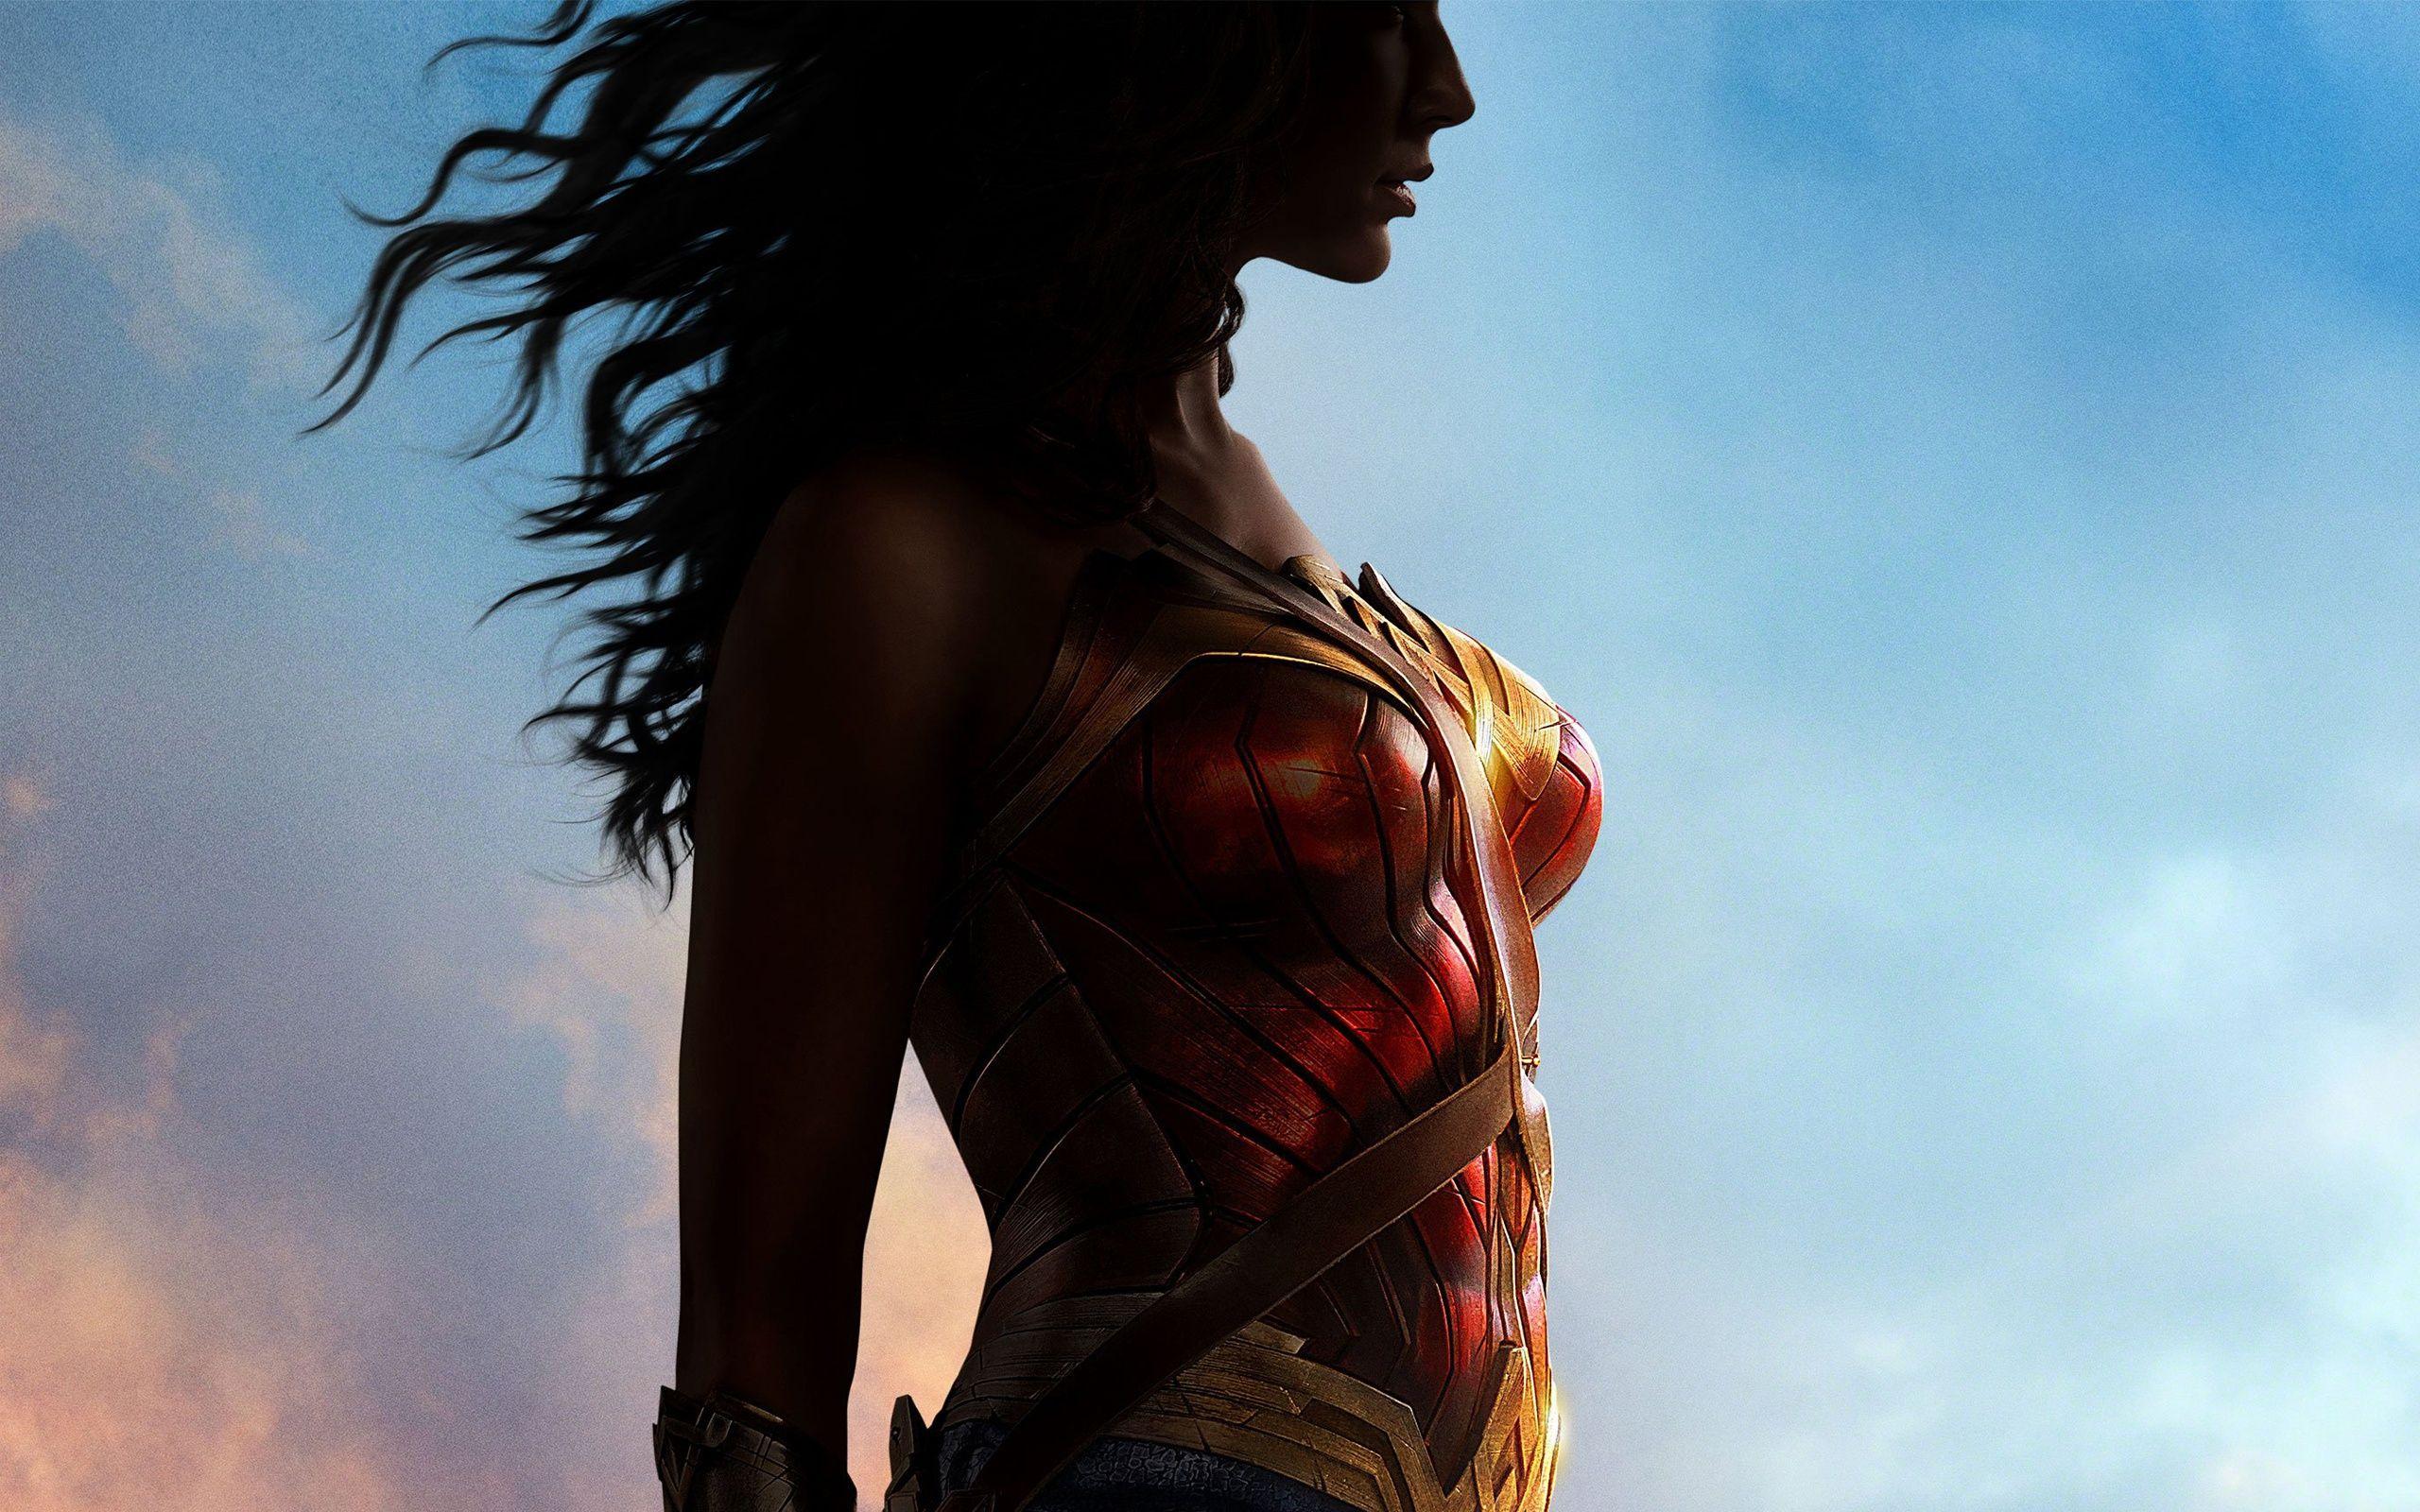 Wonder Woman Wallpaper in jpg format for free download